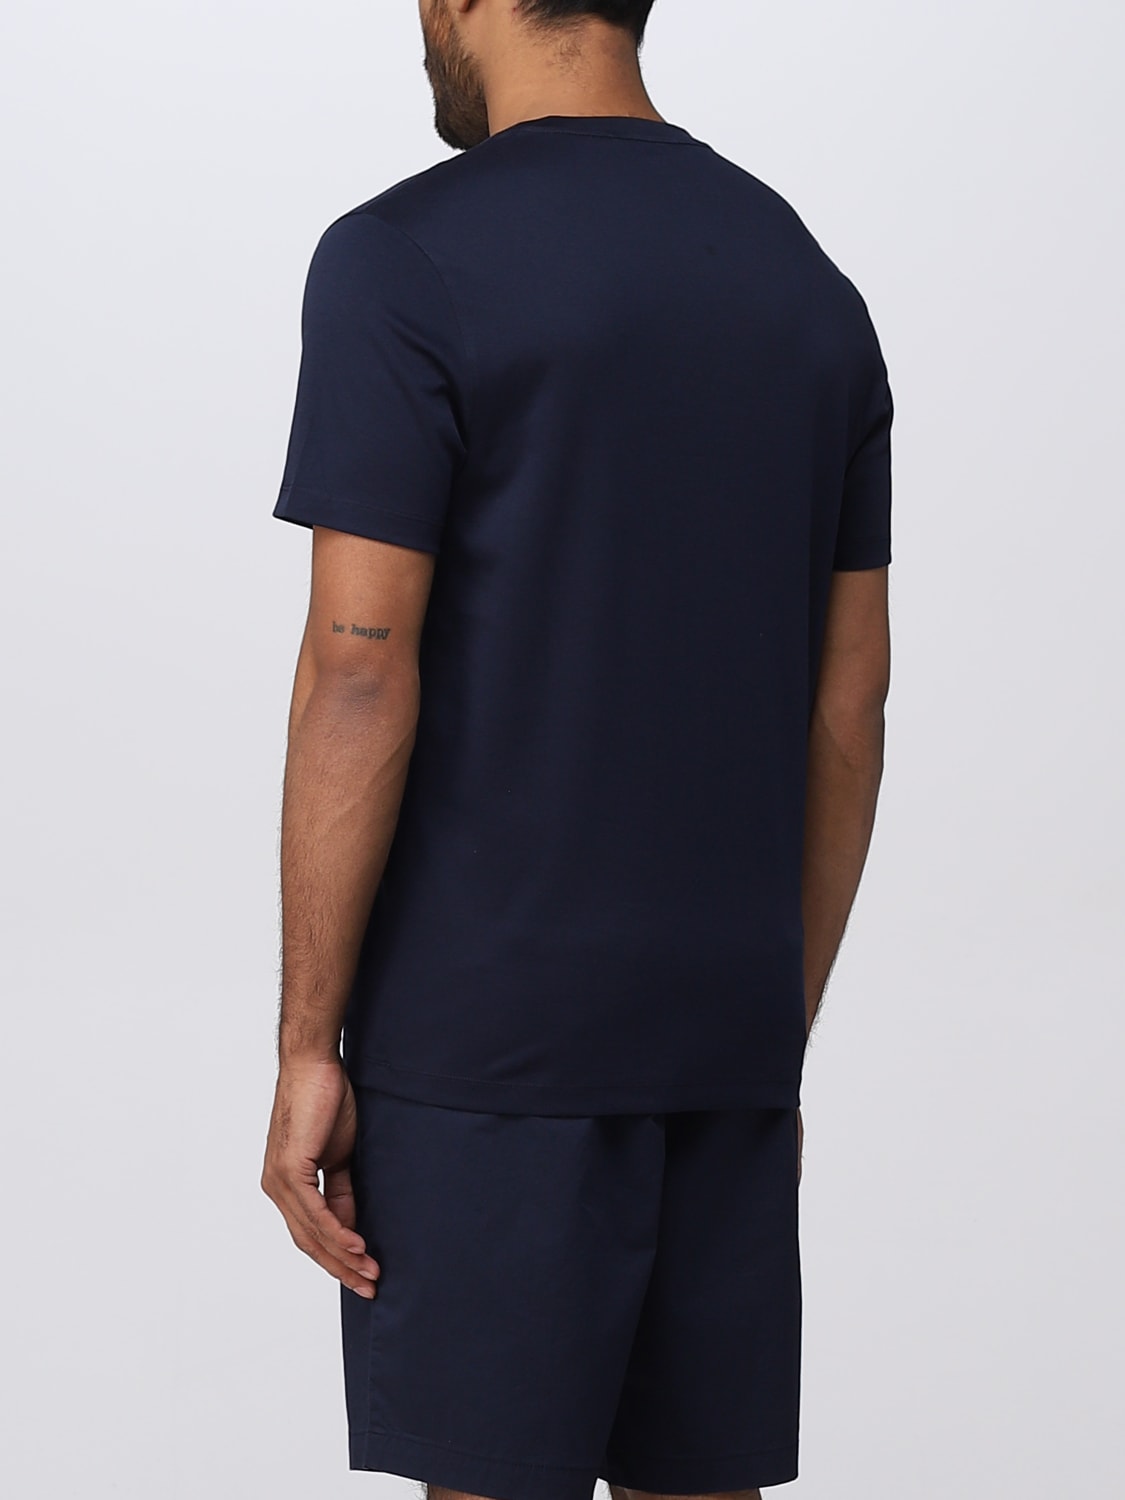 Michael Kors T-Shirt Navy